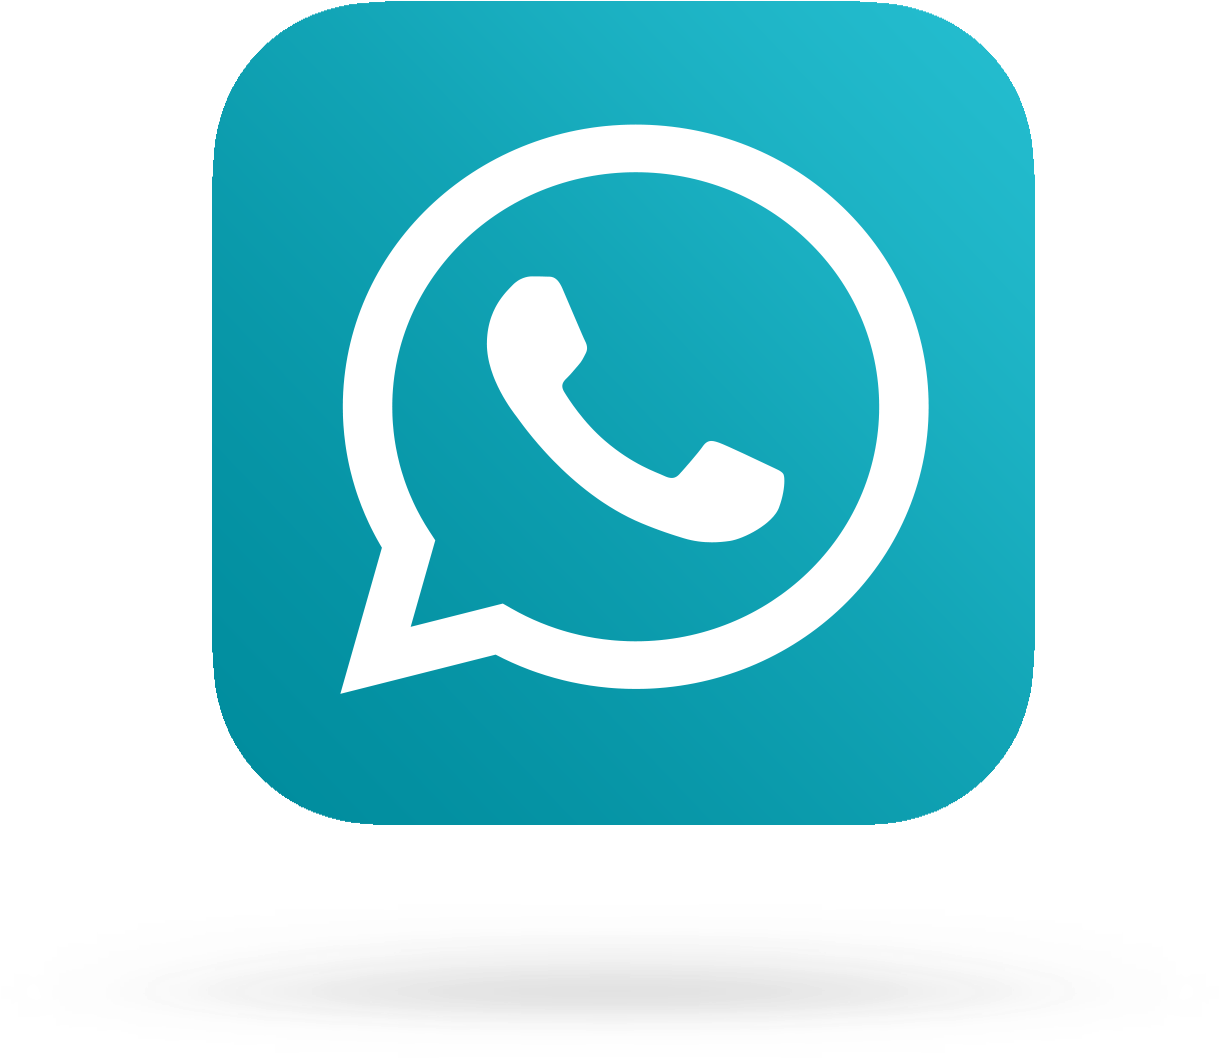 Free Whatsapp Transparent, Download Free Whatsapp Transparent png